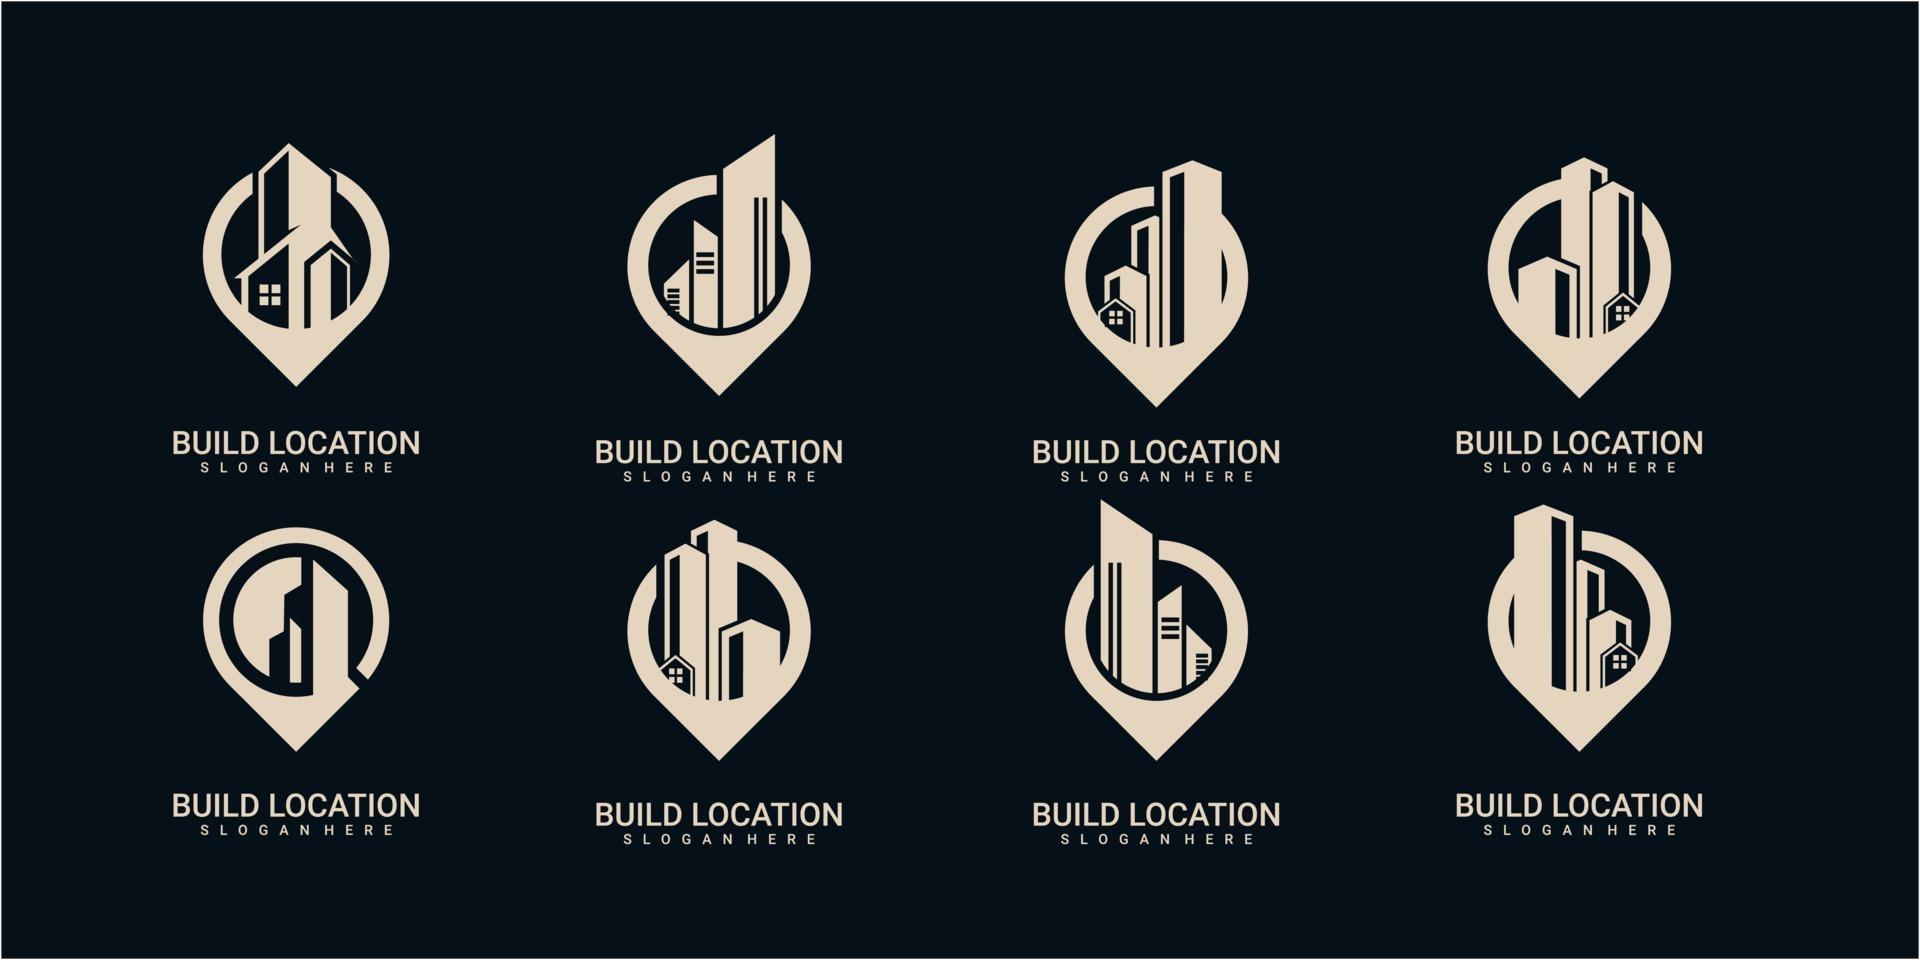 Building location logo design inspiration. vector